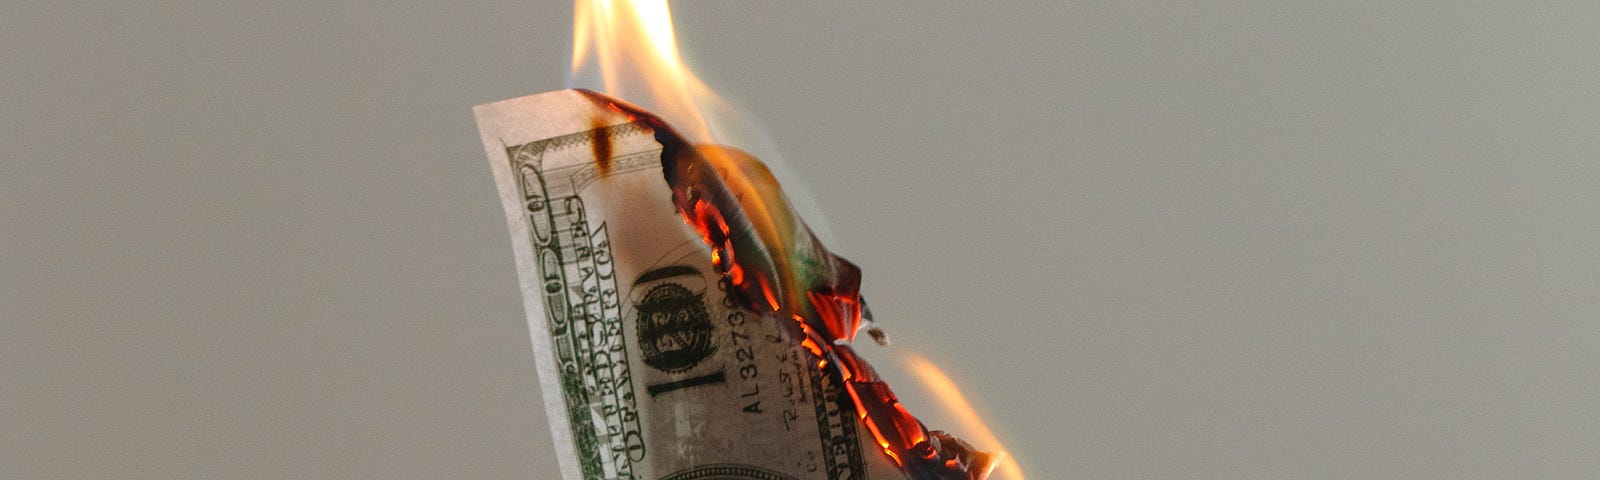 Three one hundred dollar bills on fire.